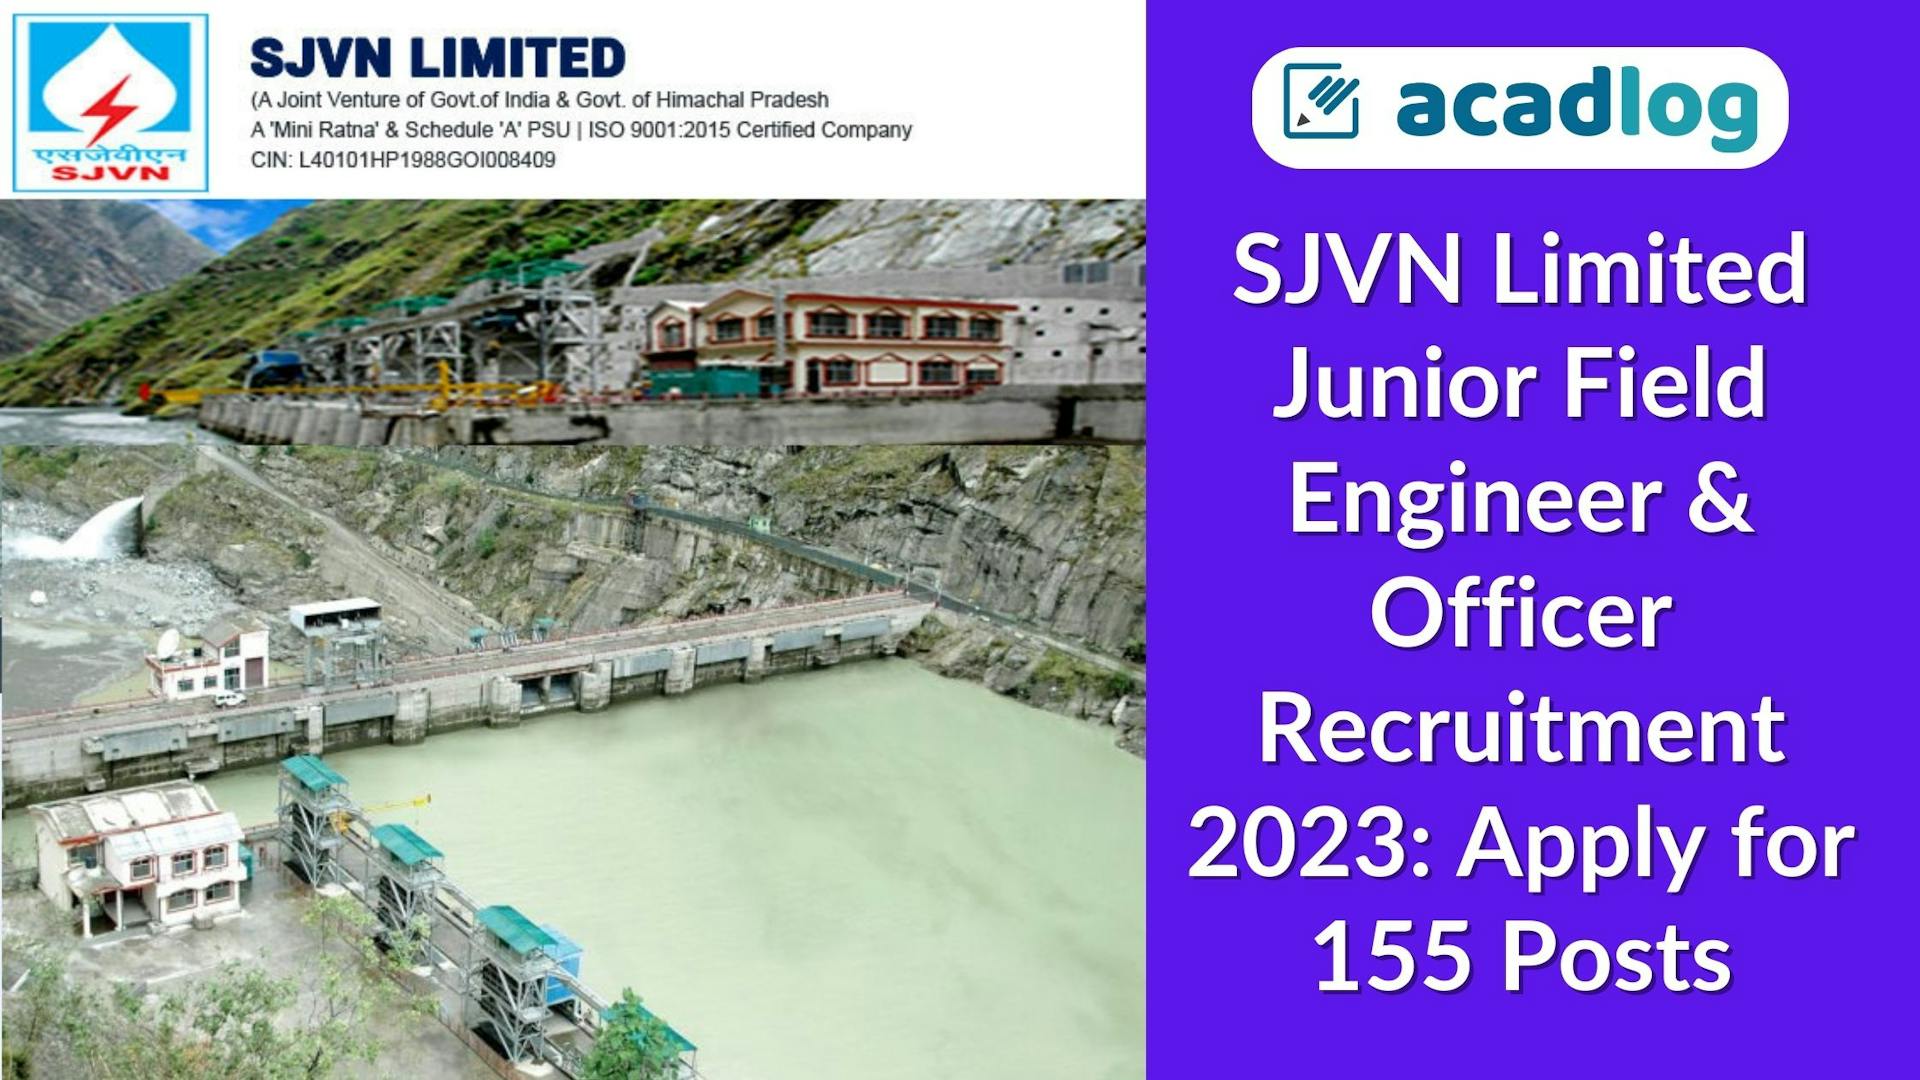 SJVN Limited Junior Field Engineer & Officer Recruitment 2023: Apply for 155 Posts